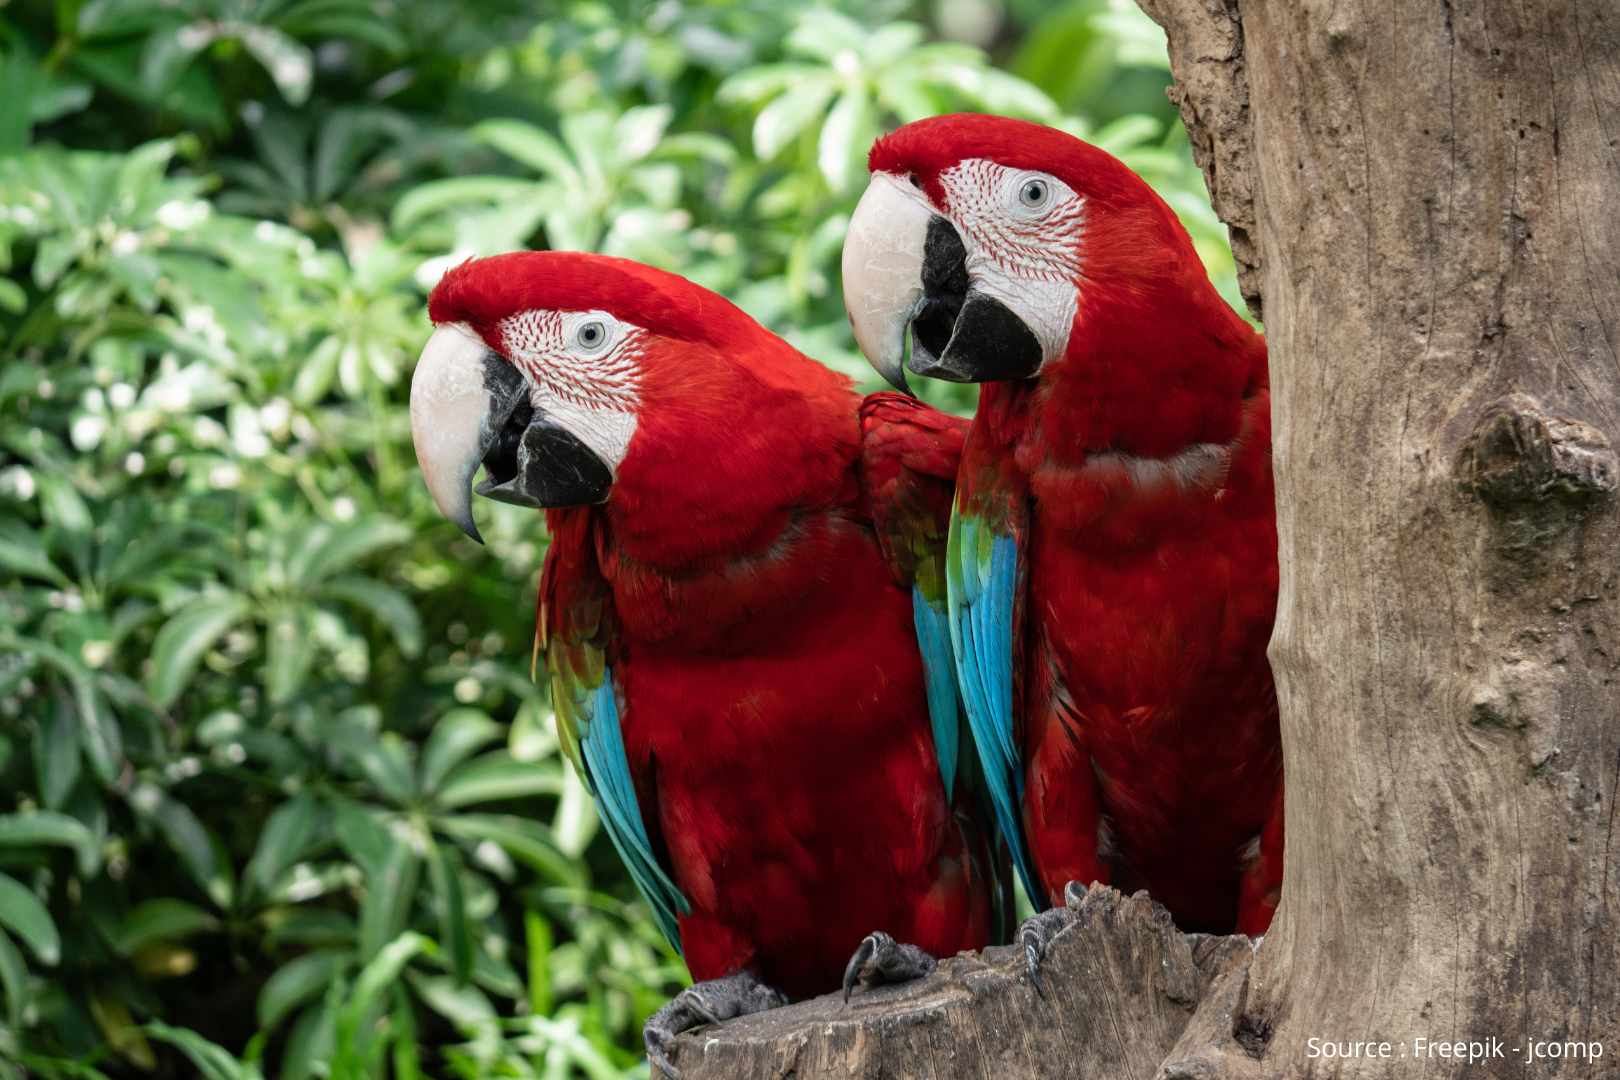 Red parrots